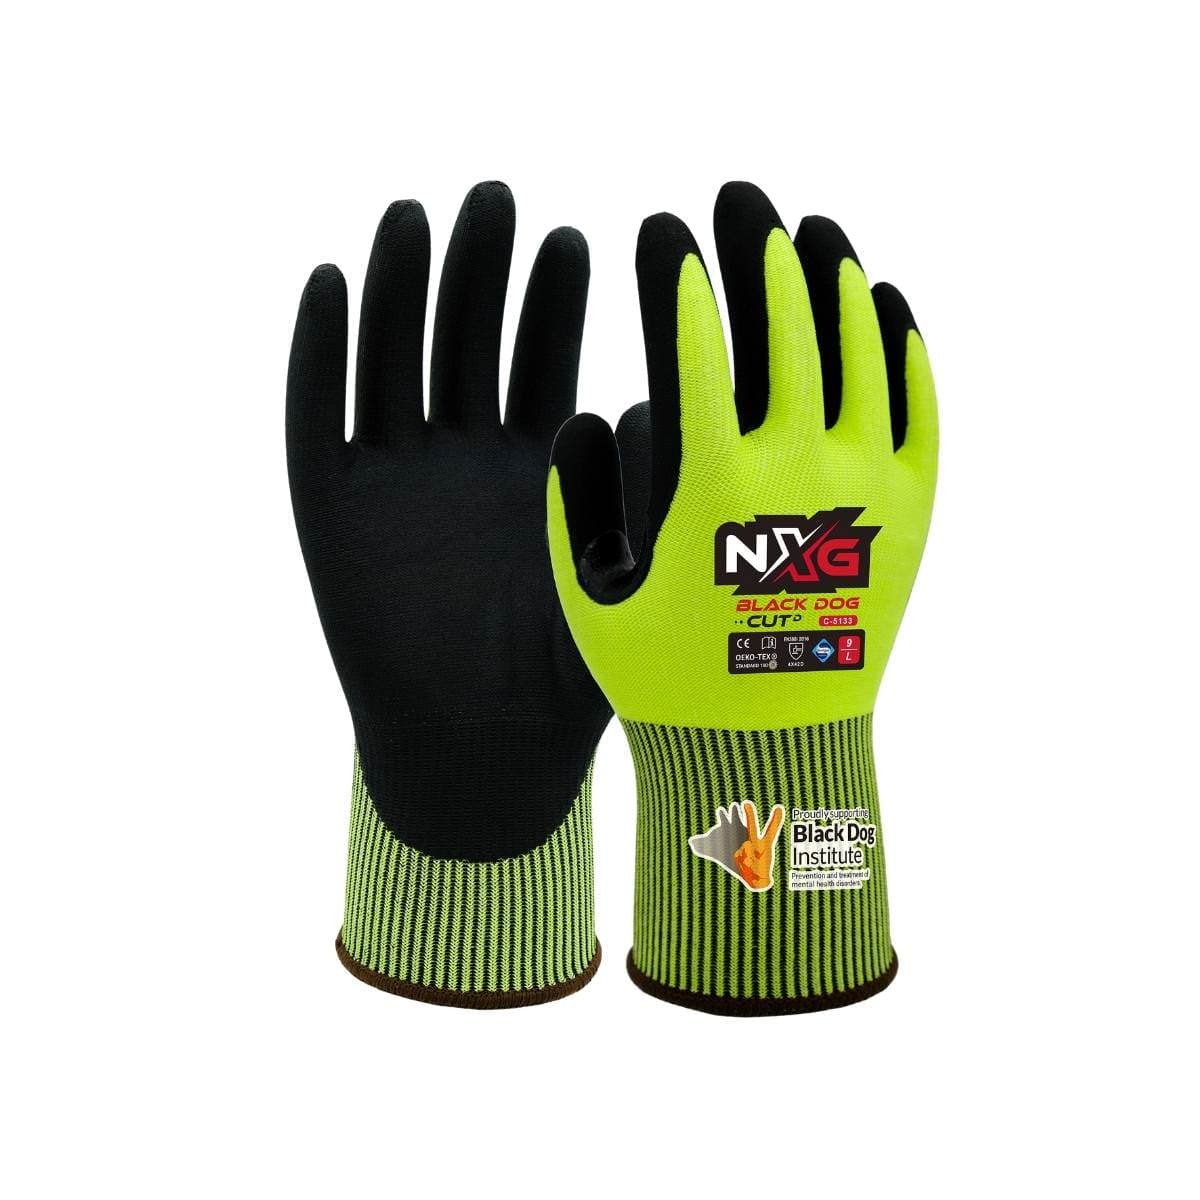 NXG™ Black Dog Cut D Gloves C-5133 (Pack of 12)